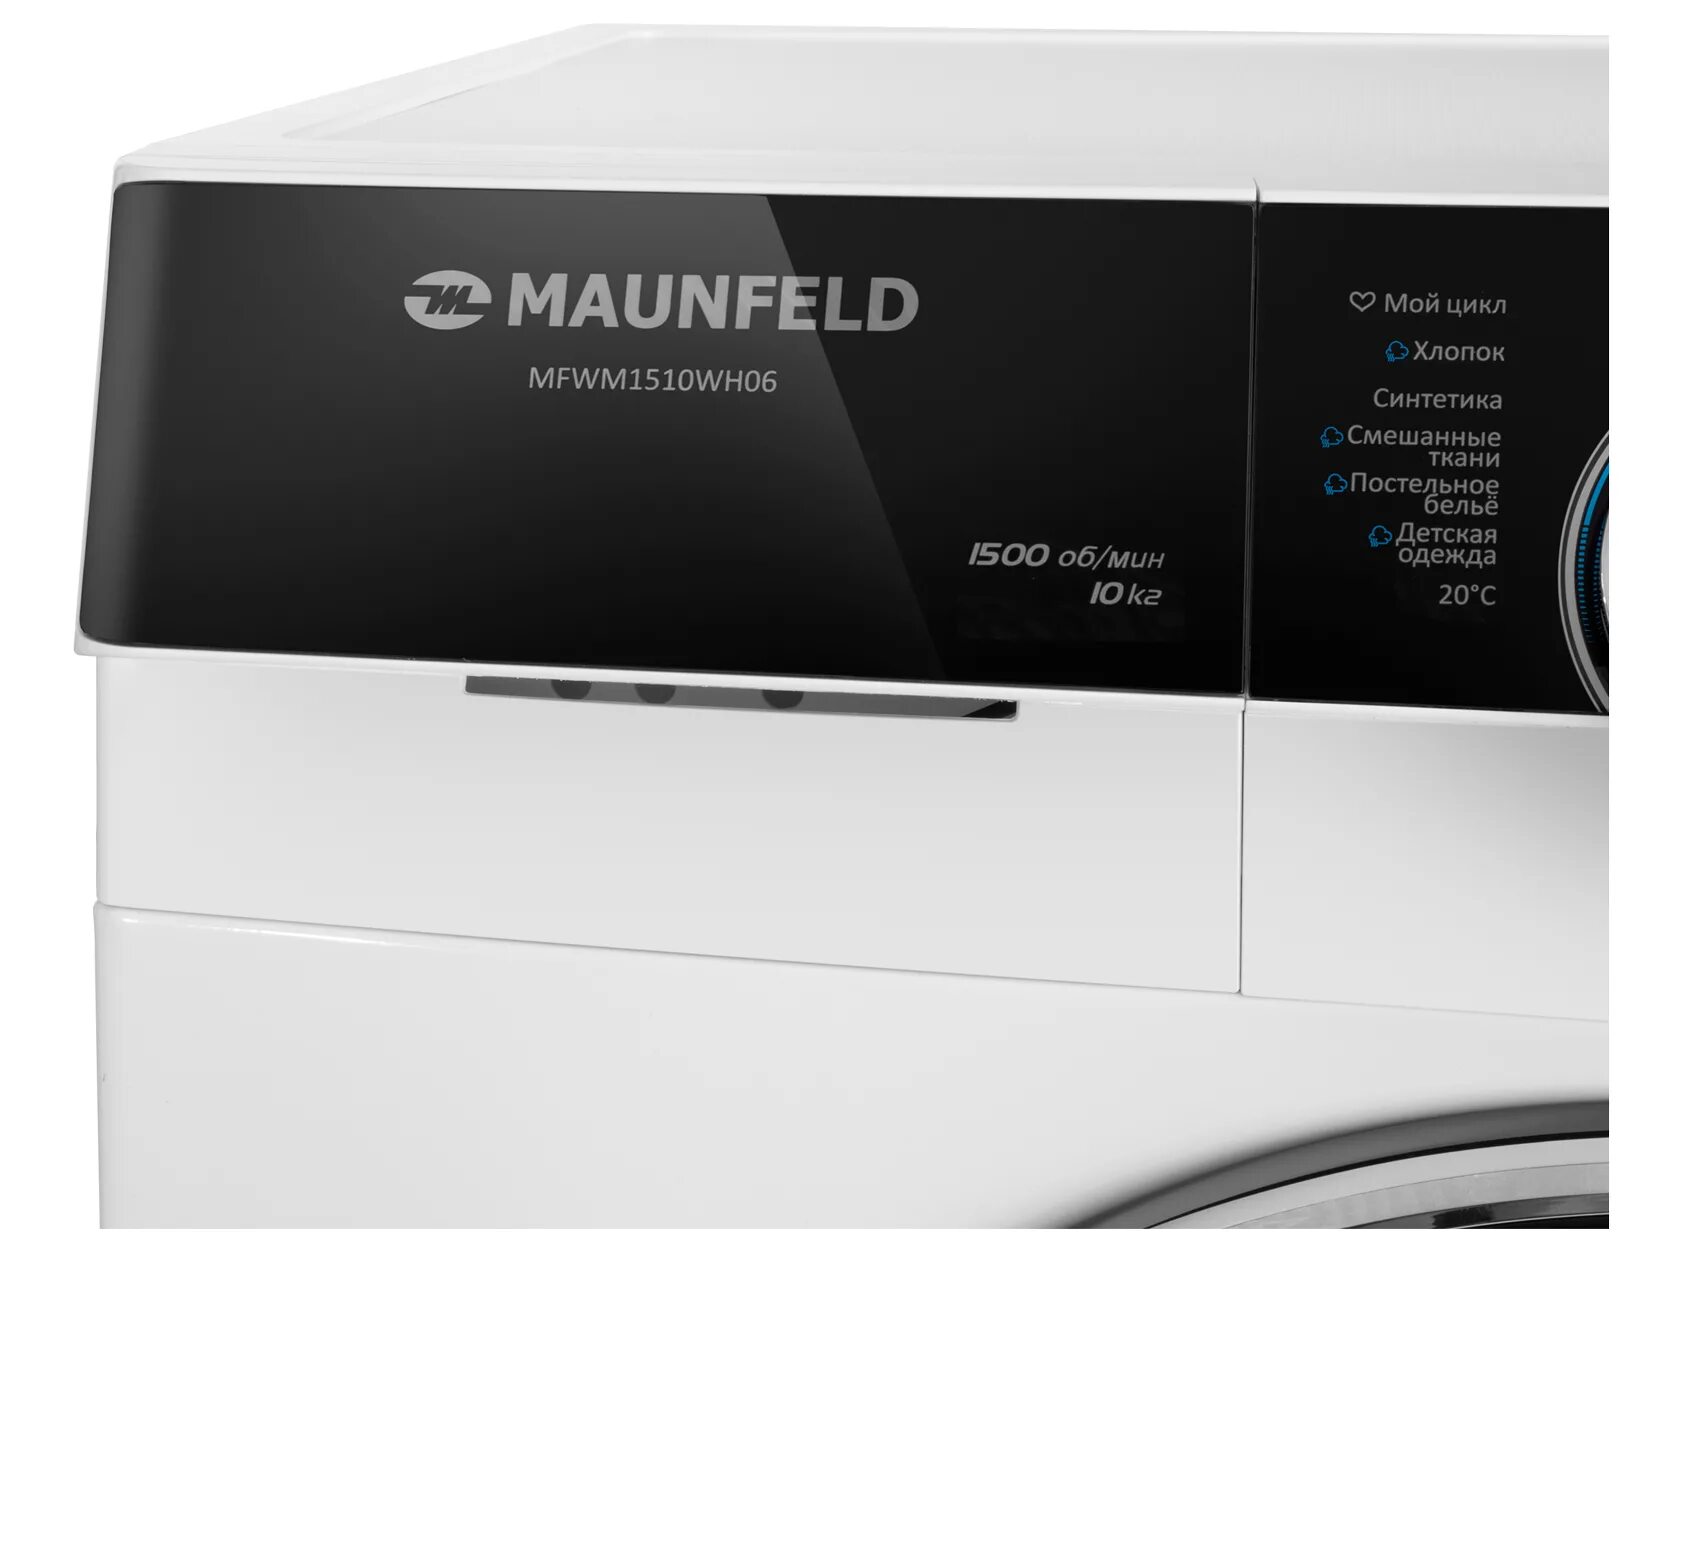 Maunfeld mfdm169wh. Maunfeld mfwm1510wh06. Стиральная машина Maunfeld mfwm106wh05. Стиральная машина Maunfeld mfwm127wh05. Стиральная машина Maunfeld с сушкой и паром mfwm1486wh06 инвертором.